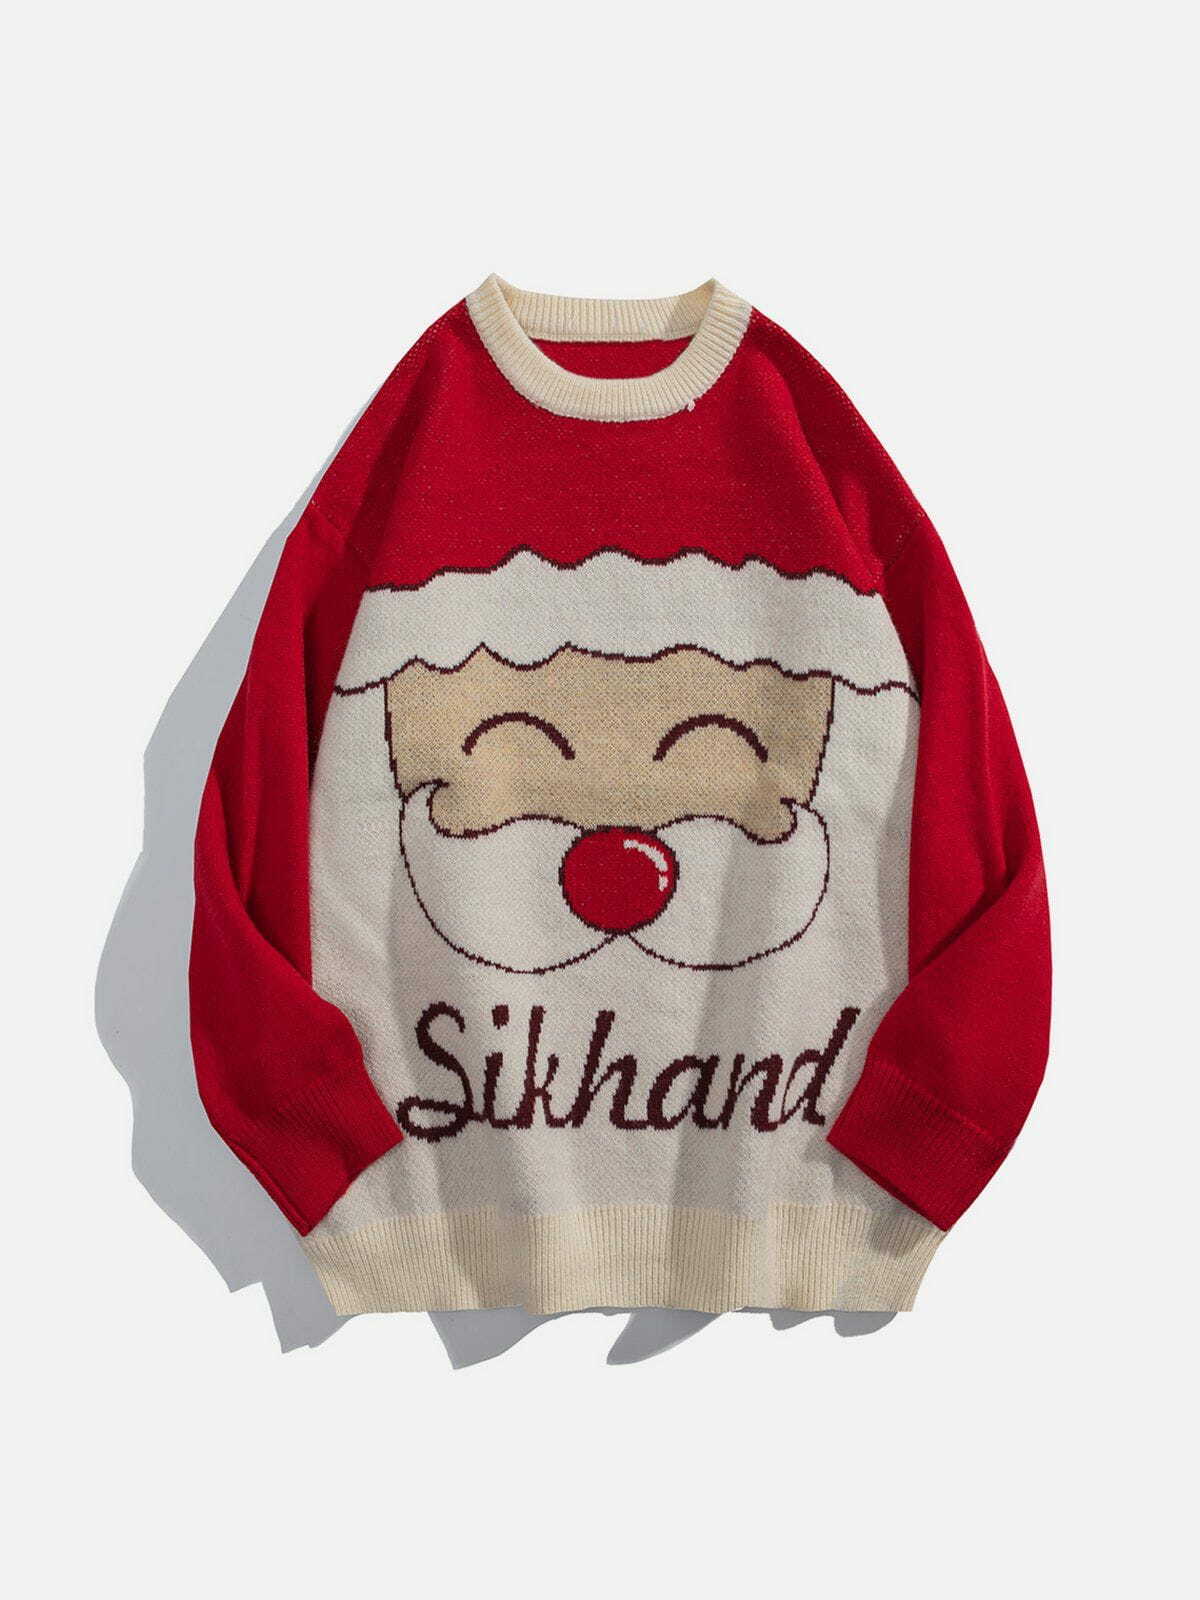 festive santa claus sweater playful & vibrant holiday fashion 5275